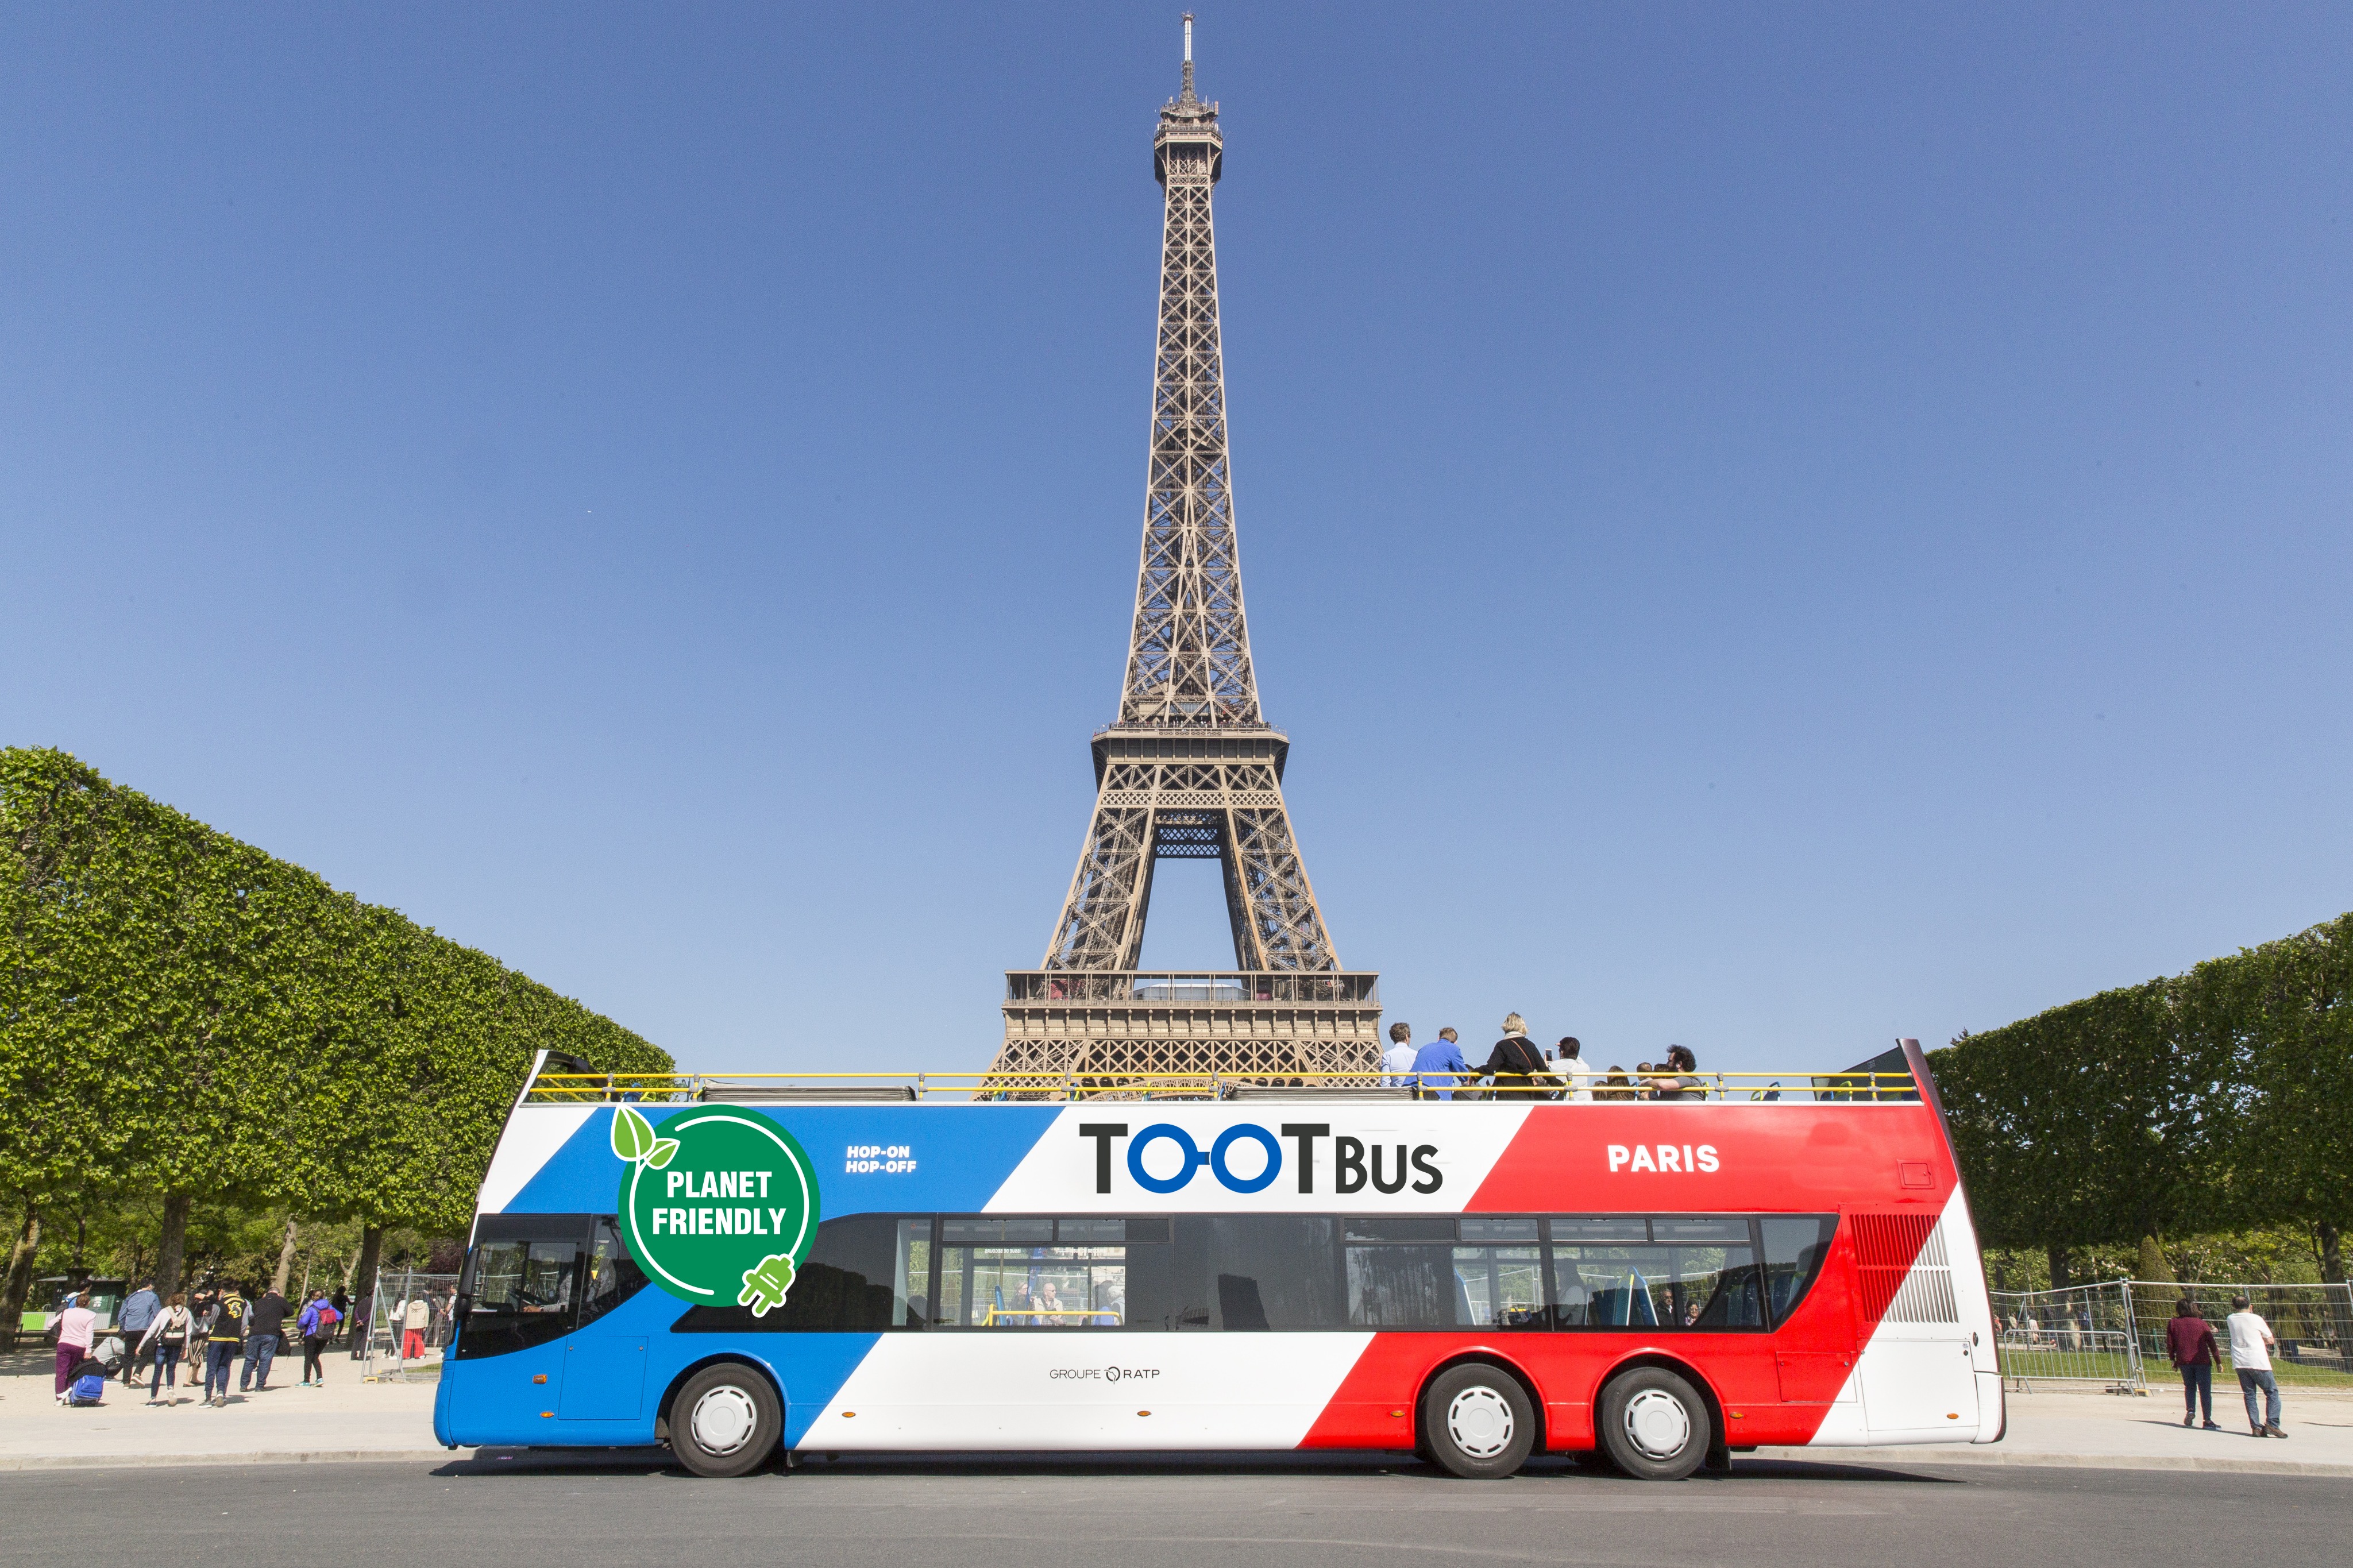 Tootbus Paris Kids tour - Paris - 